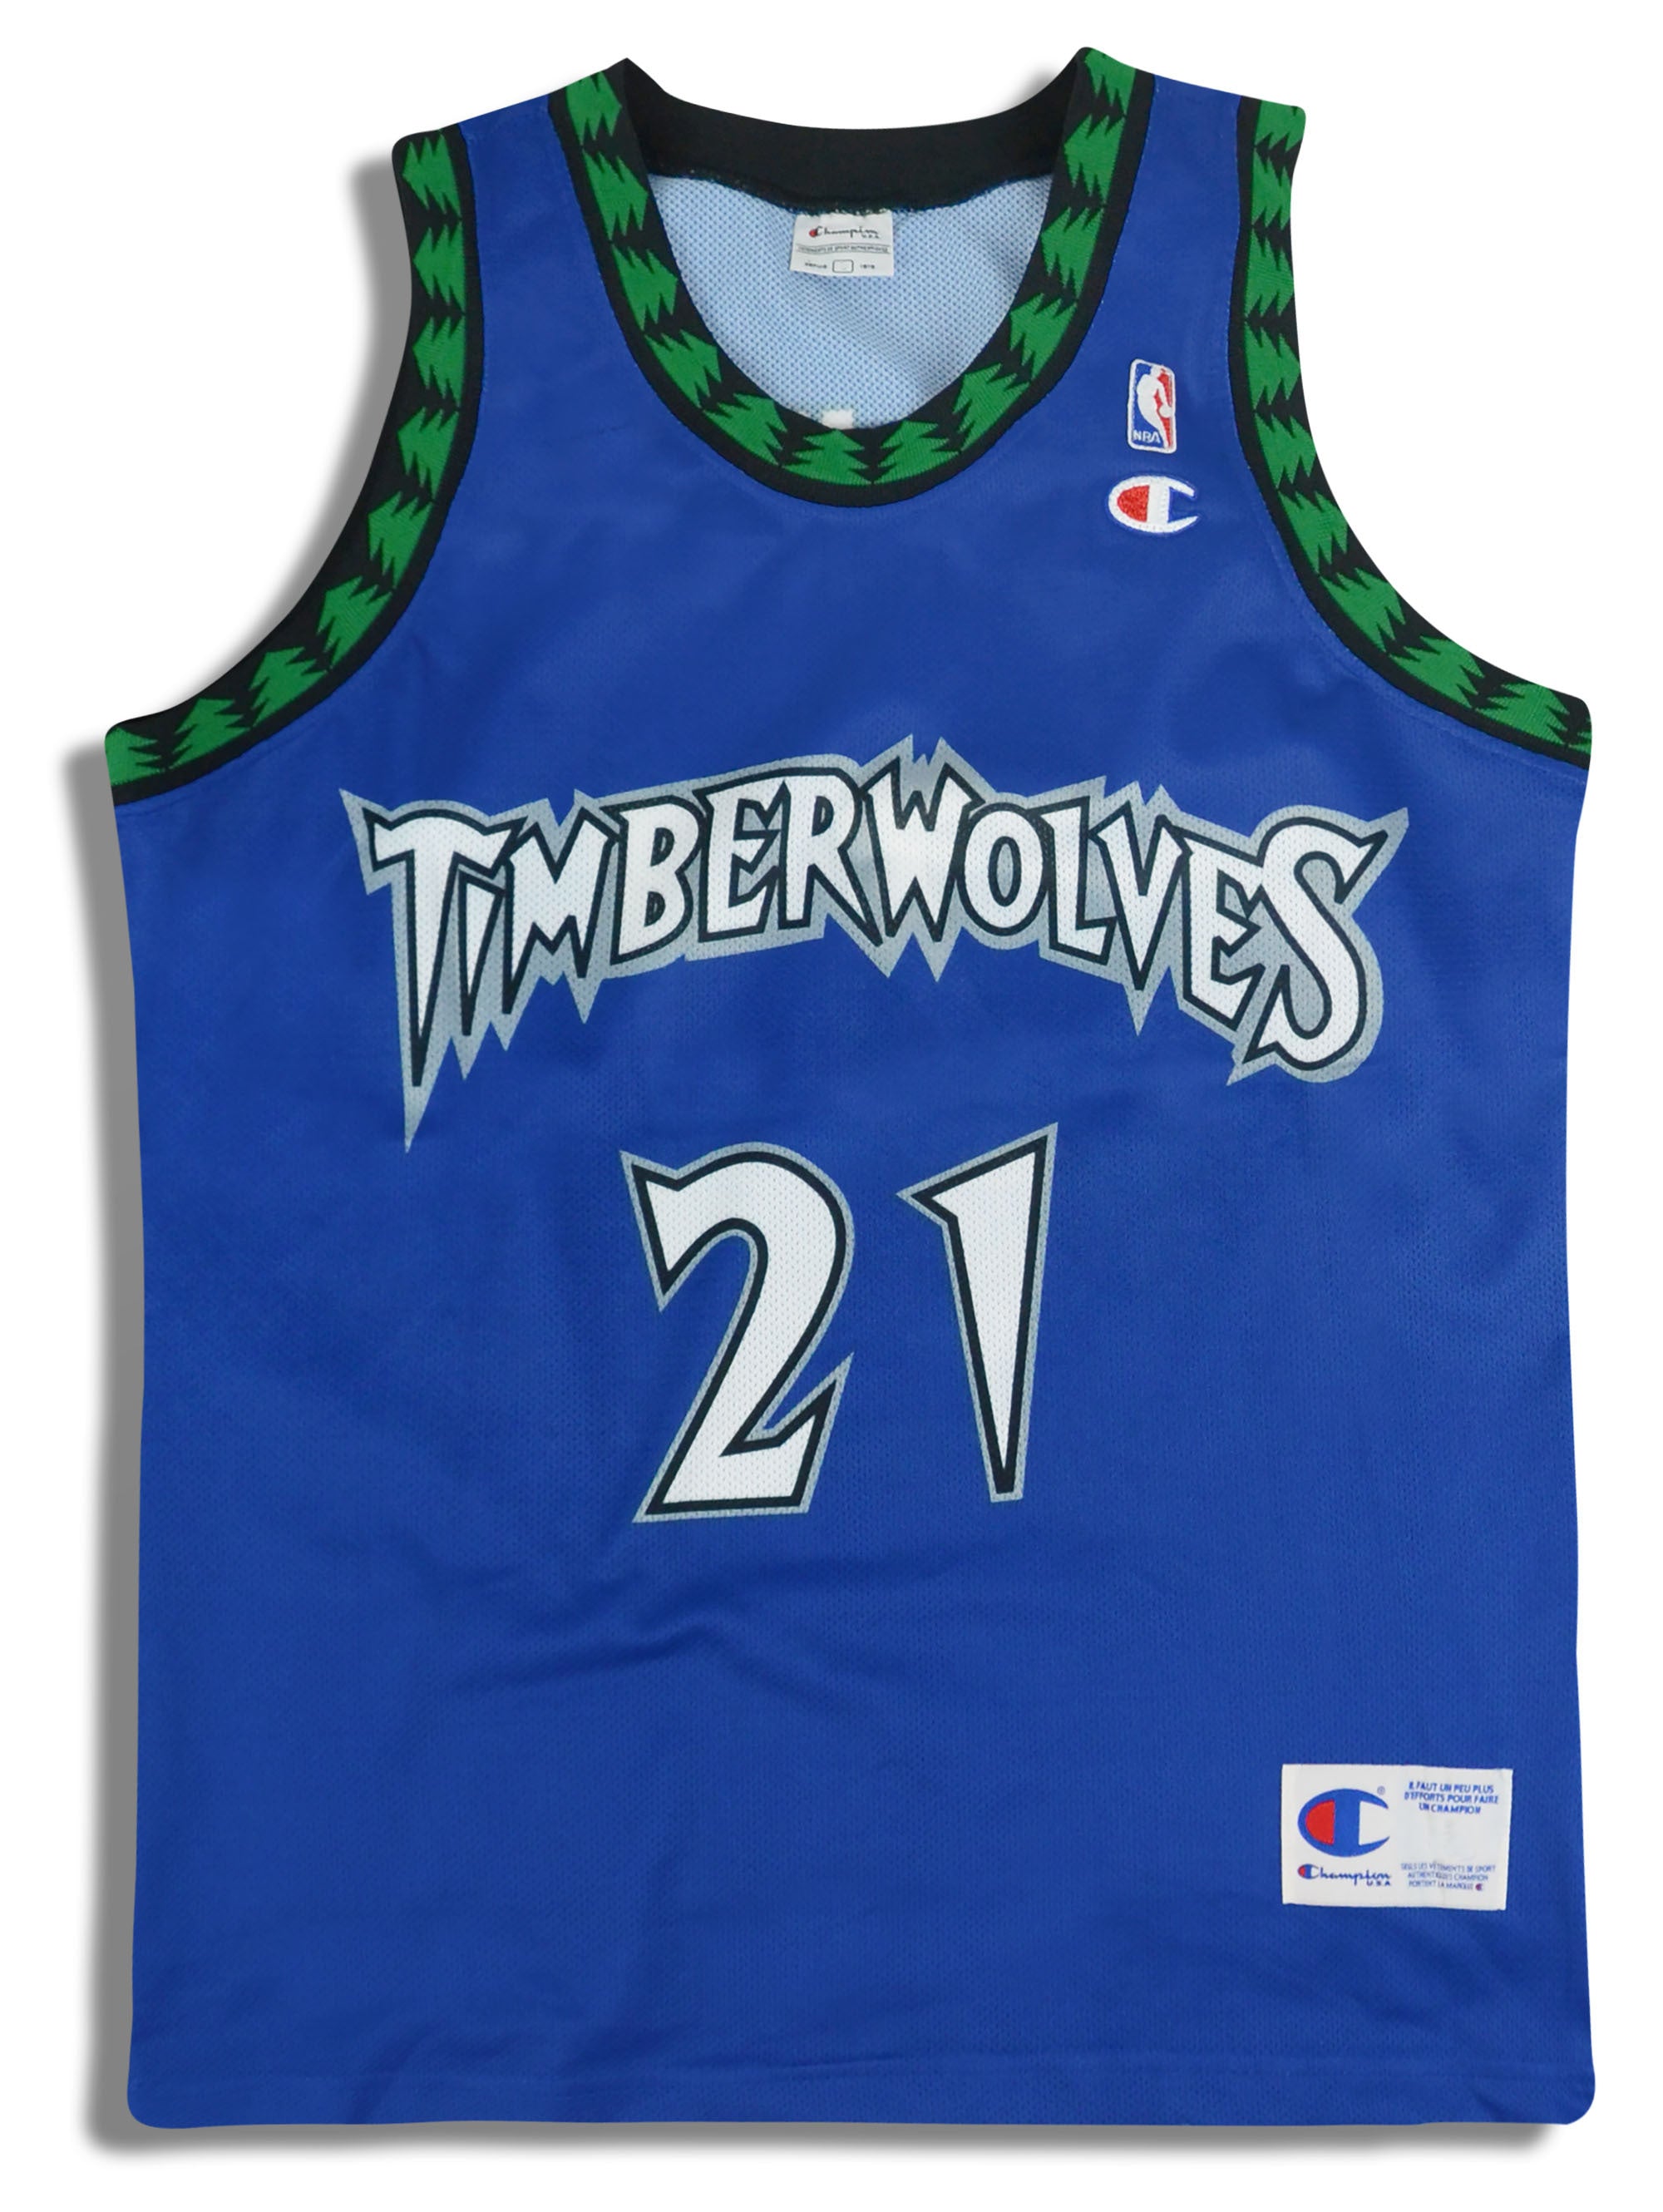 Nike NBA Minnesota Timberwolves Jersey #21 Kevin Garnett sz XL+2